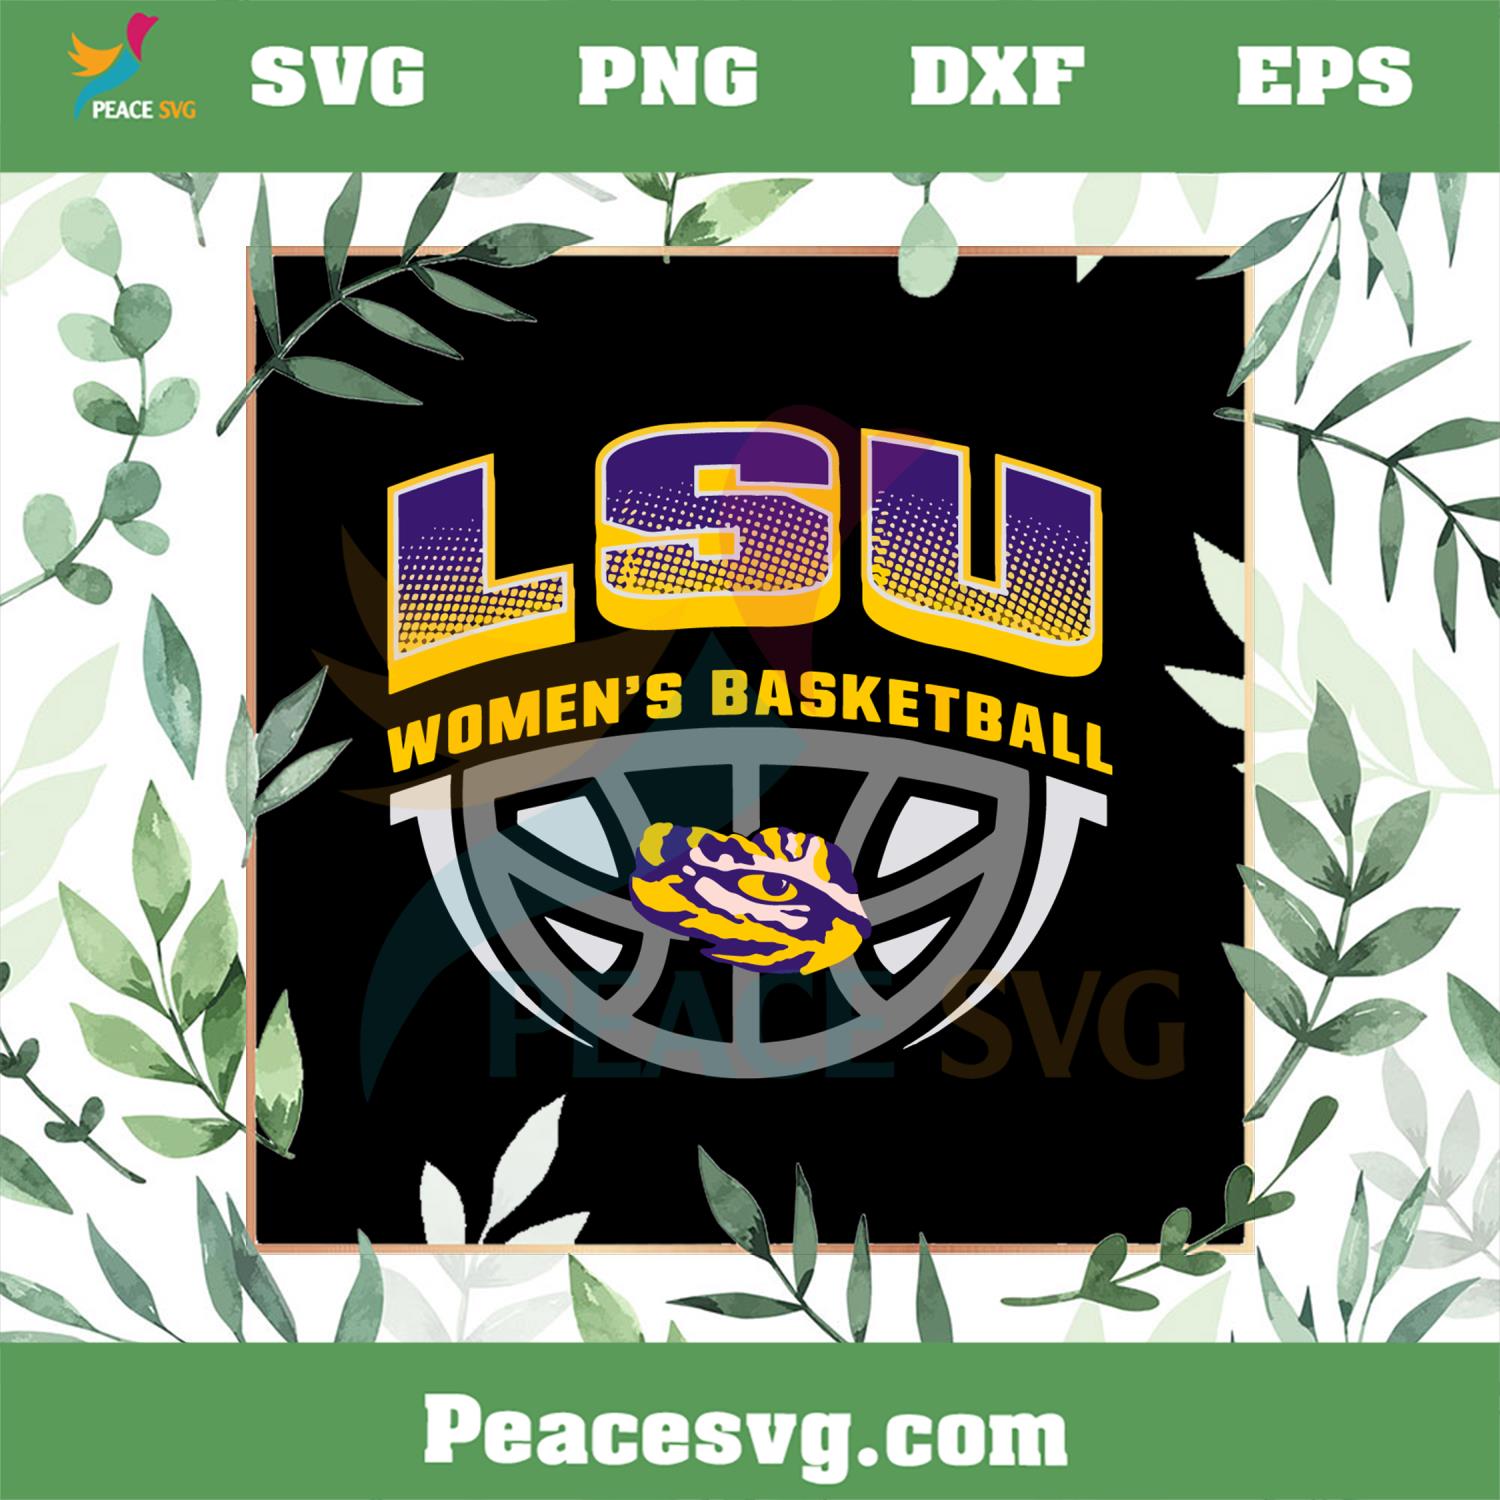 Lsu Tigers Women’s Basketball National Champion SVG Cutting Files